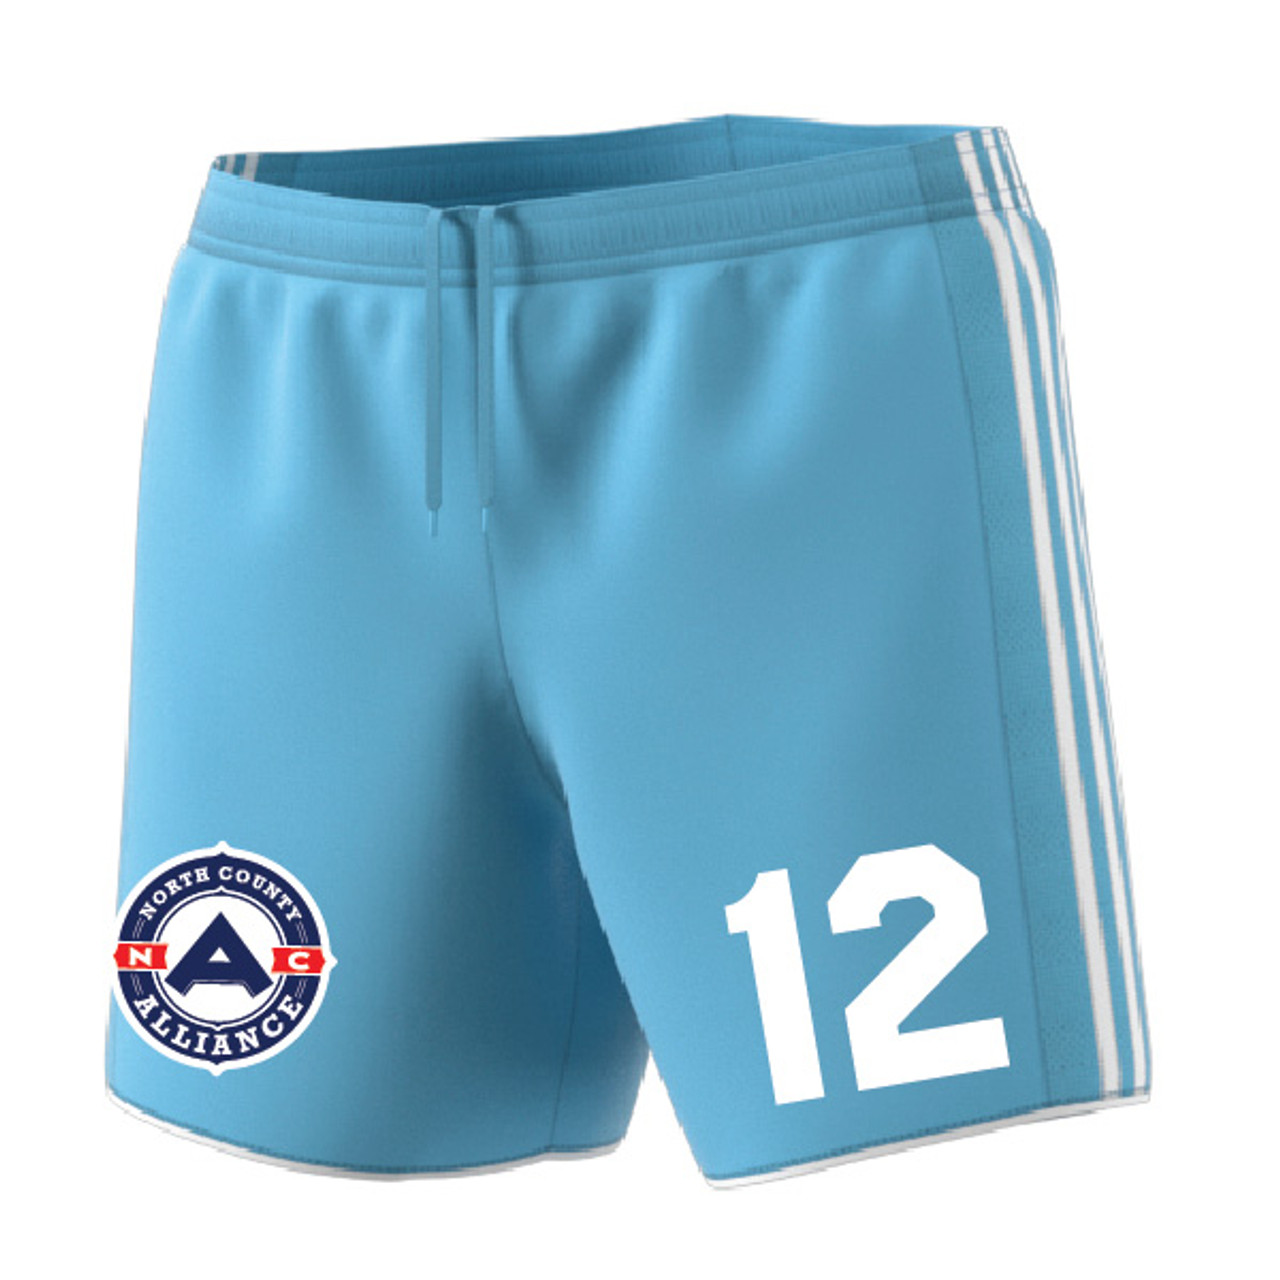 tastigo 17 shorts